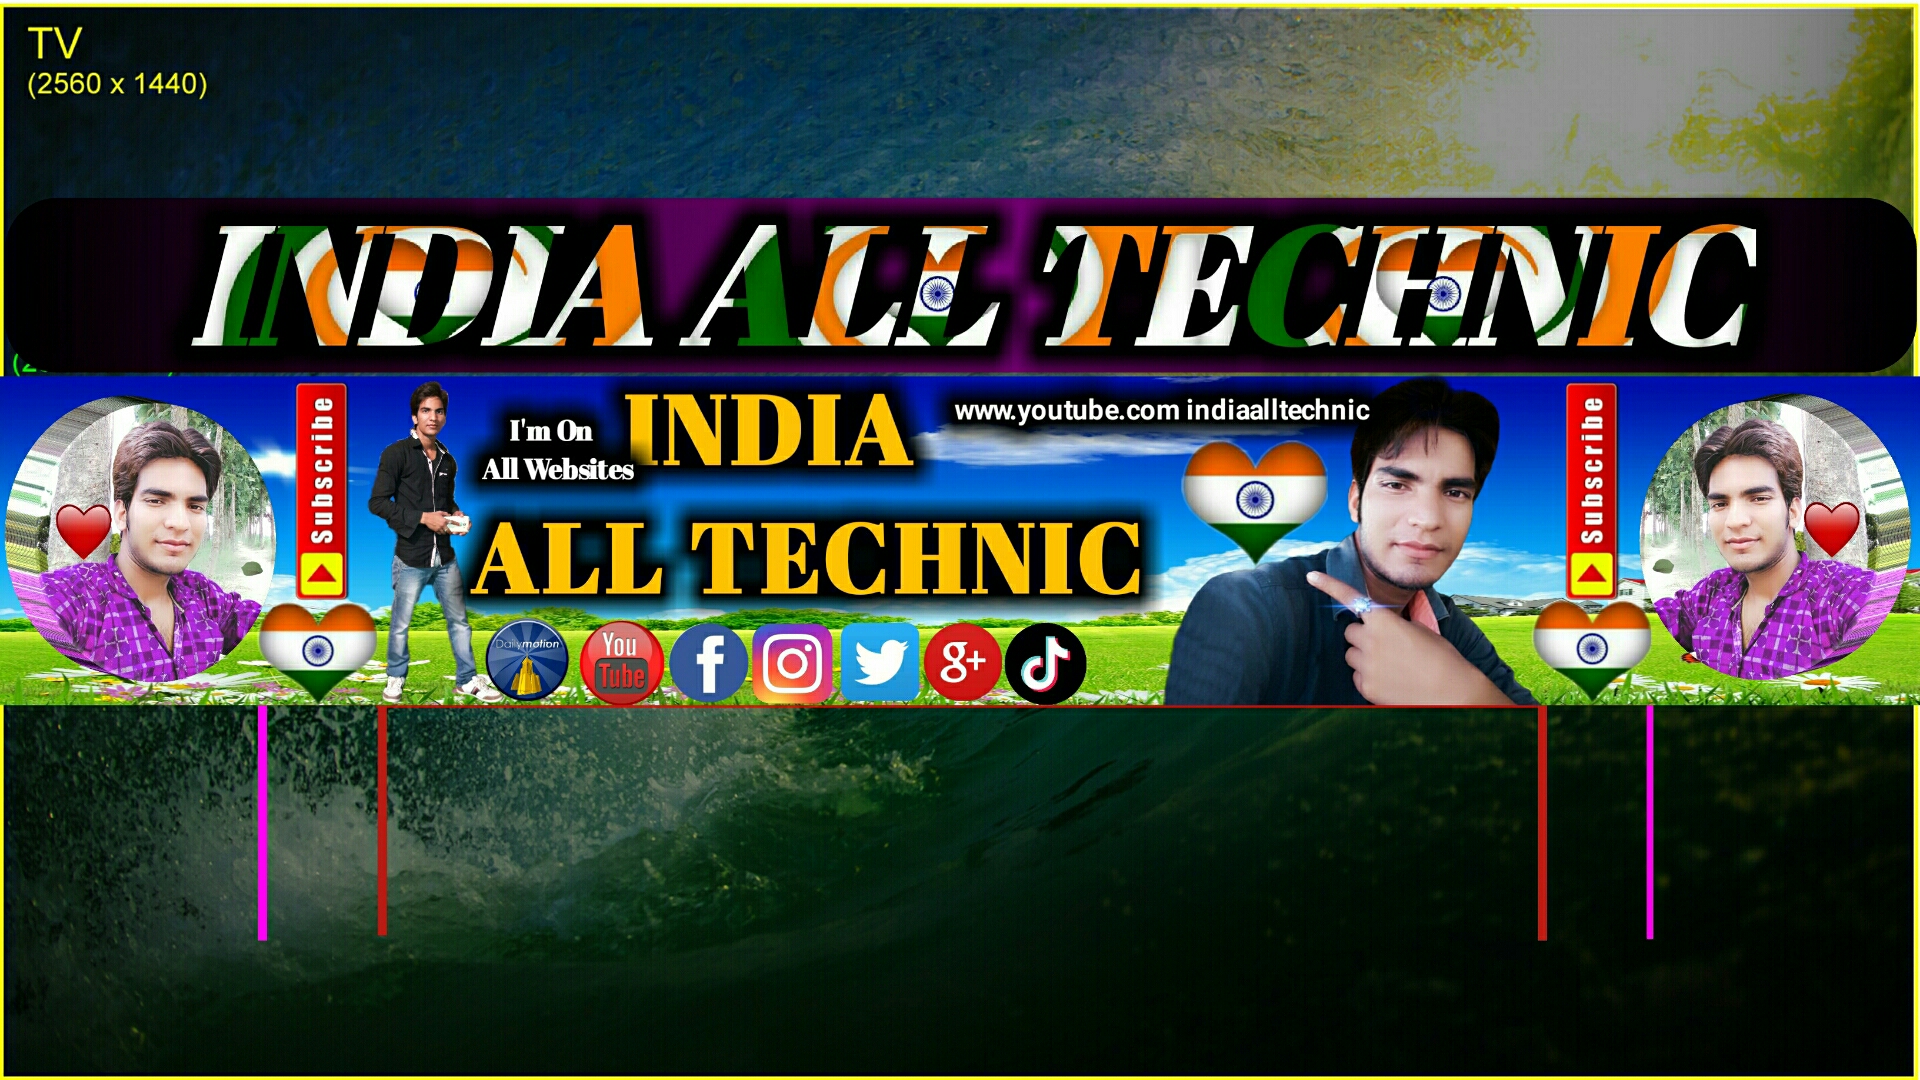 INDIA ALL TECHNIC